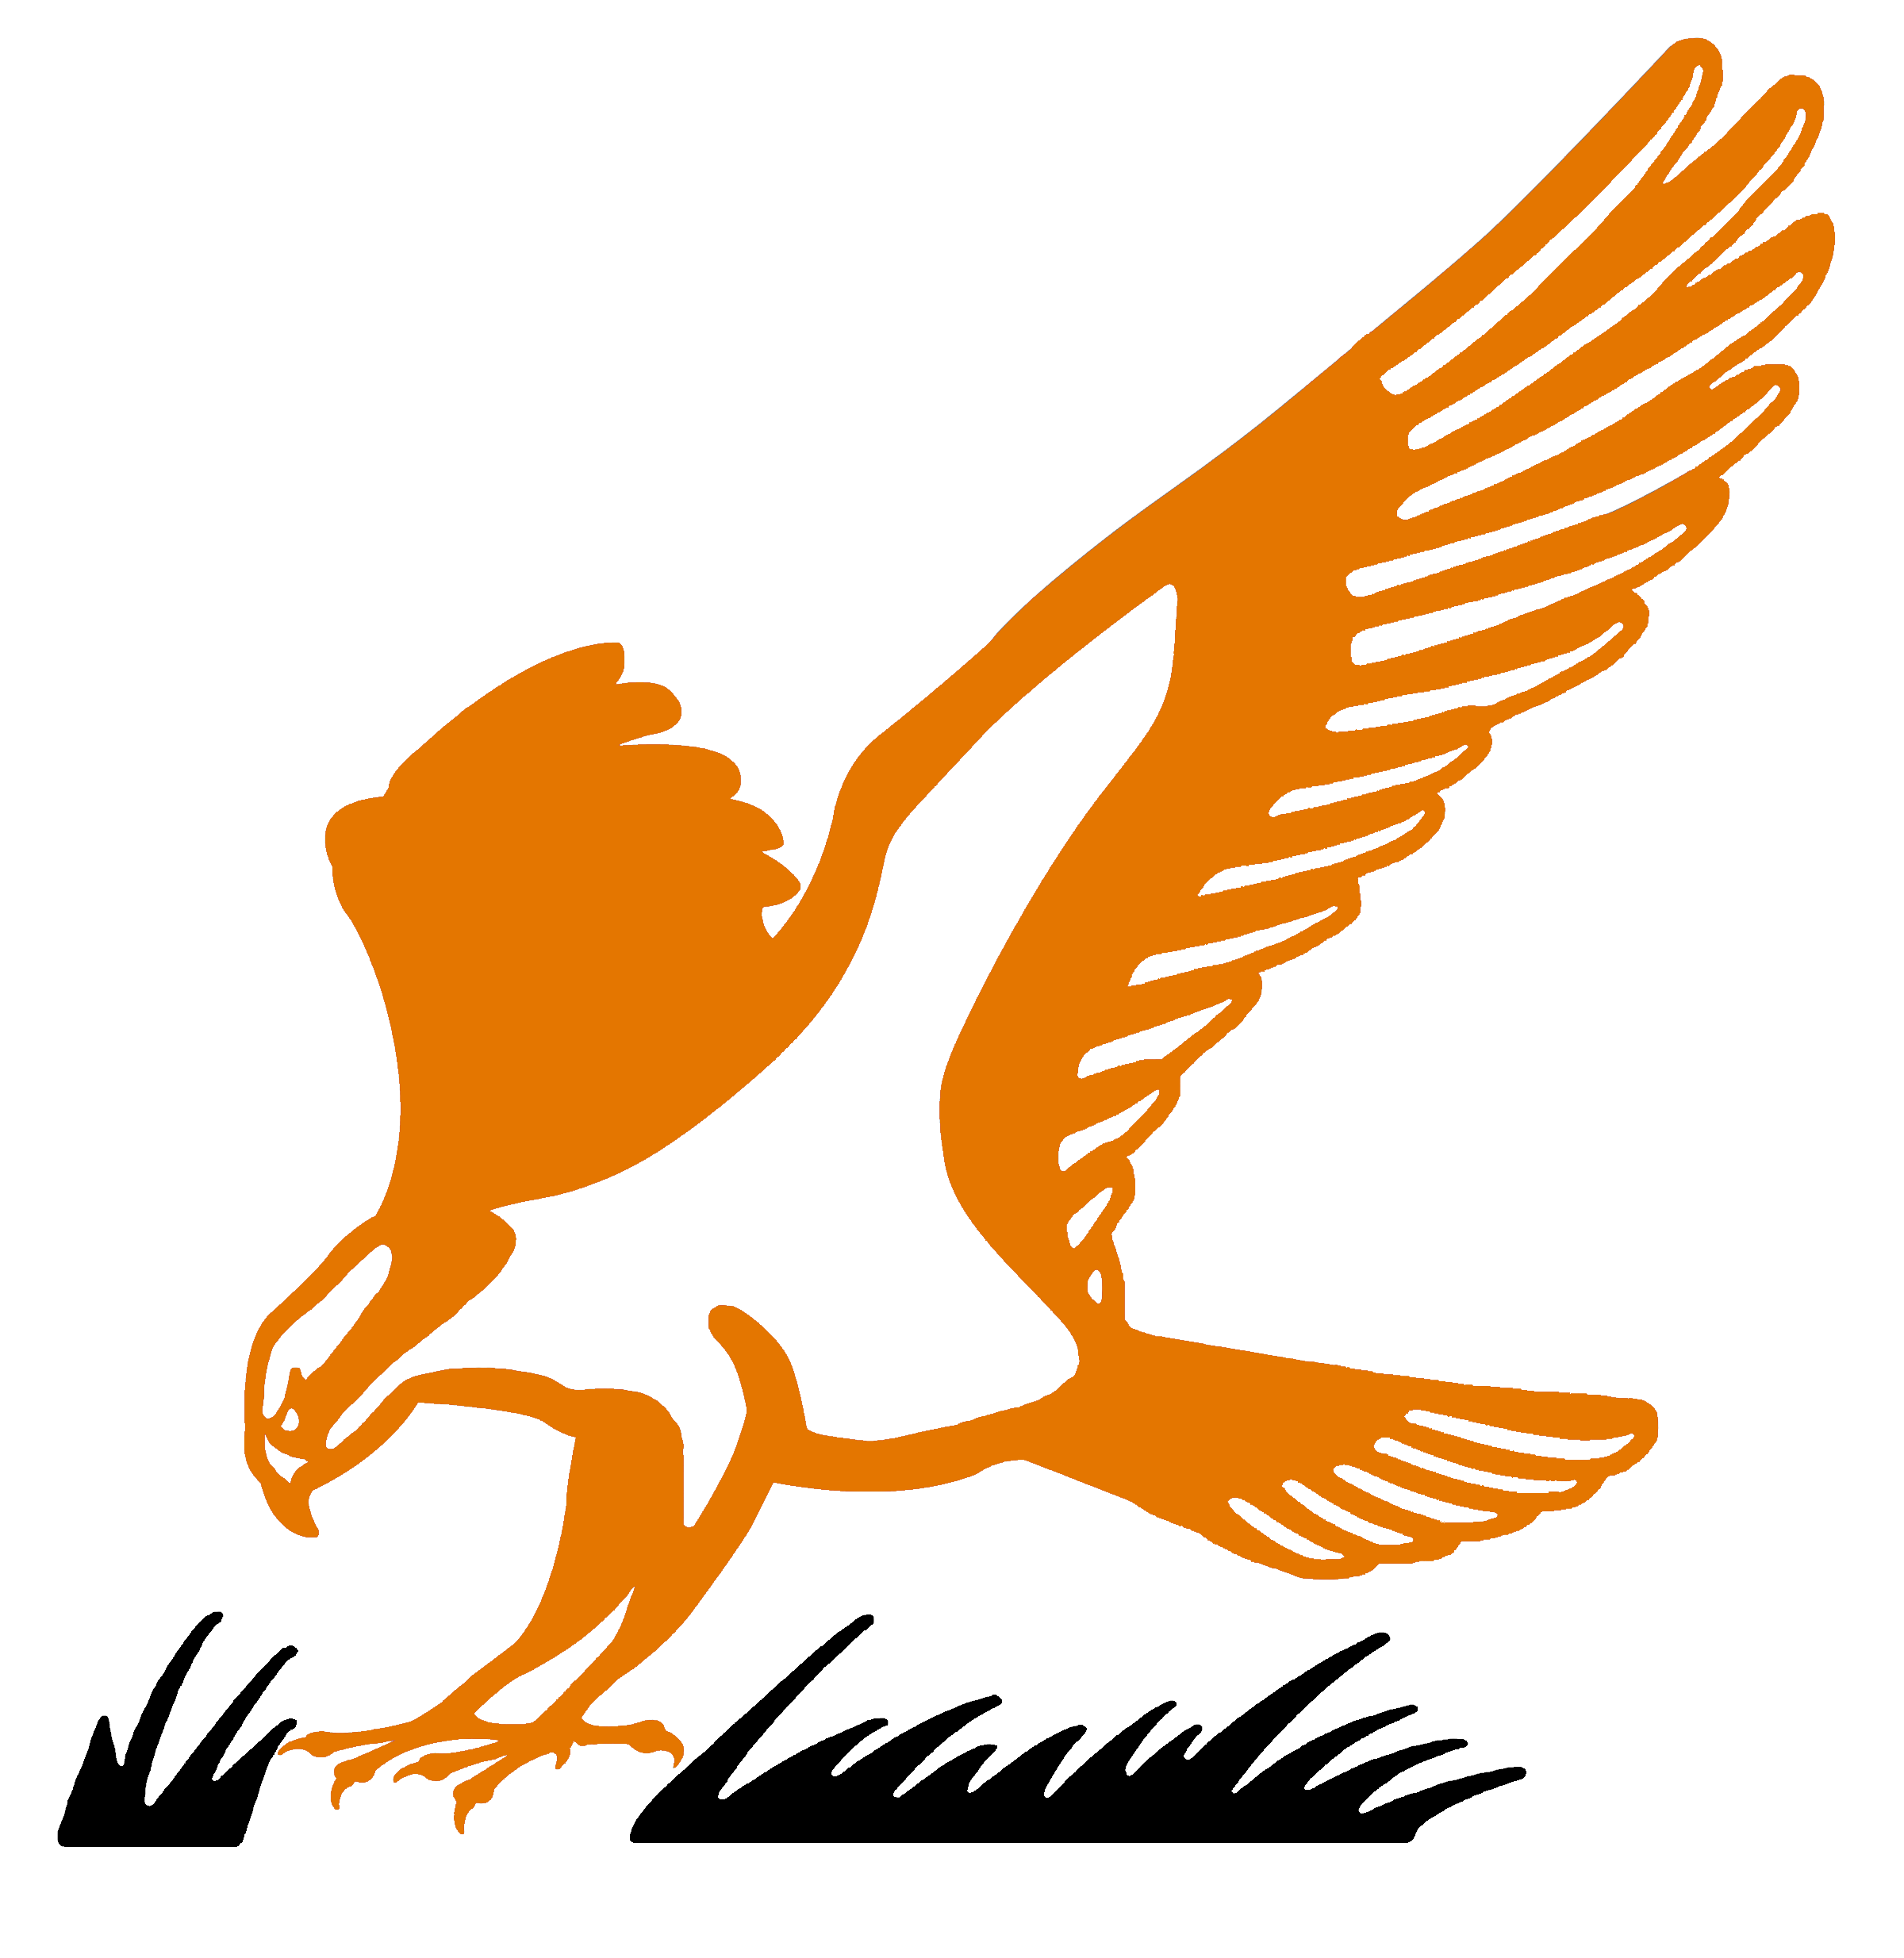 Hawk clipart osprey, Hawk osprey Transparent FREE for download on ...